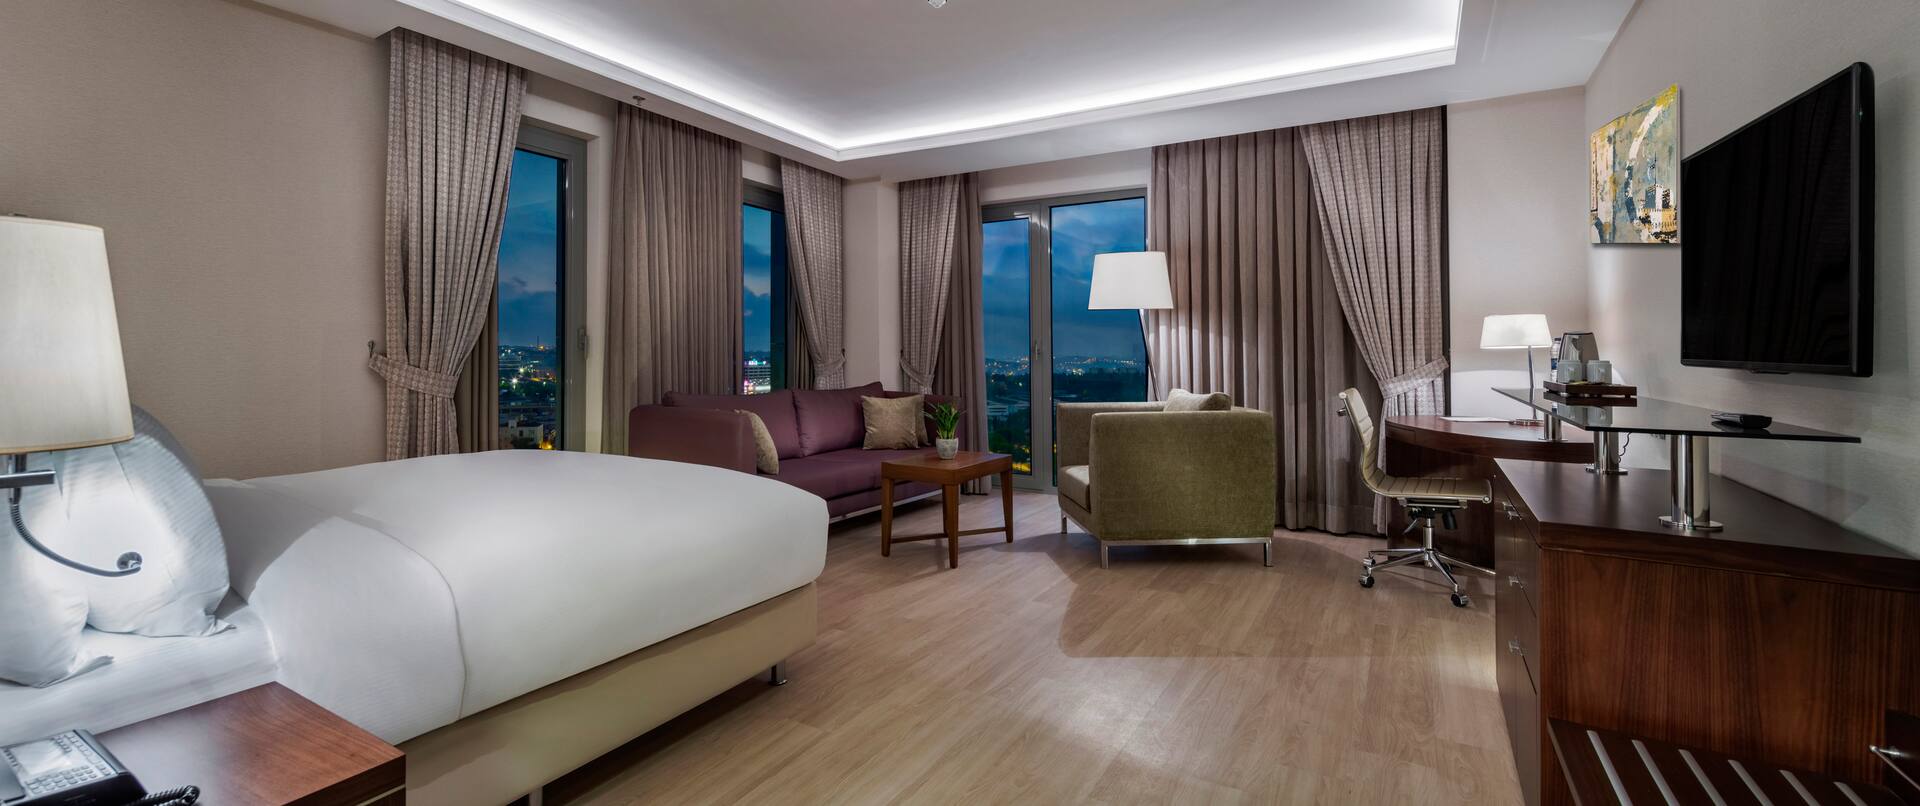 DoubleTree by Hilton Istanbul Topkapi Hotel, TR - KING CORNER ROOM